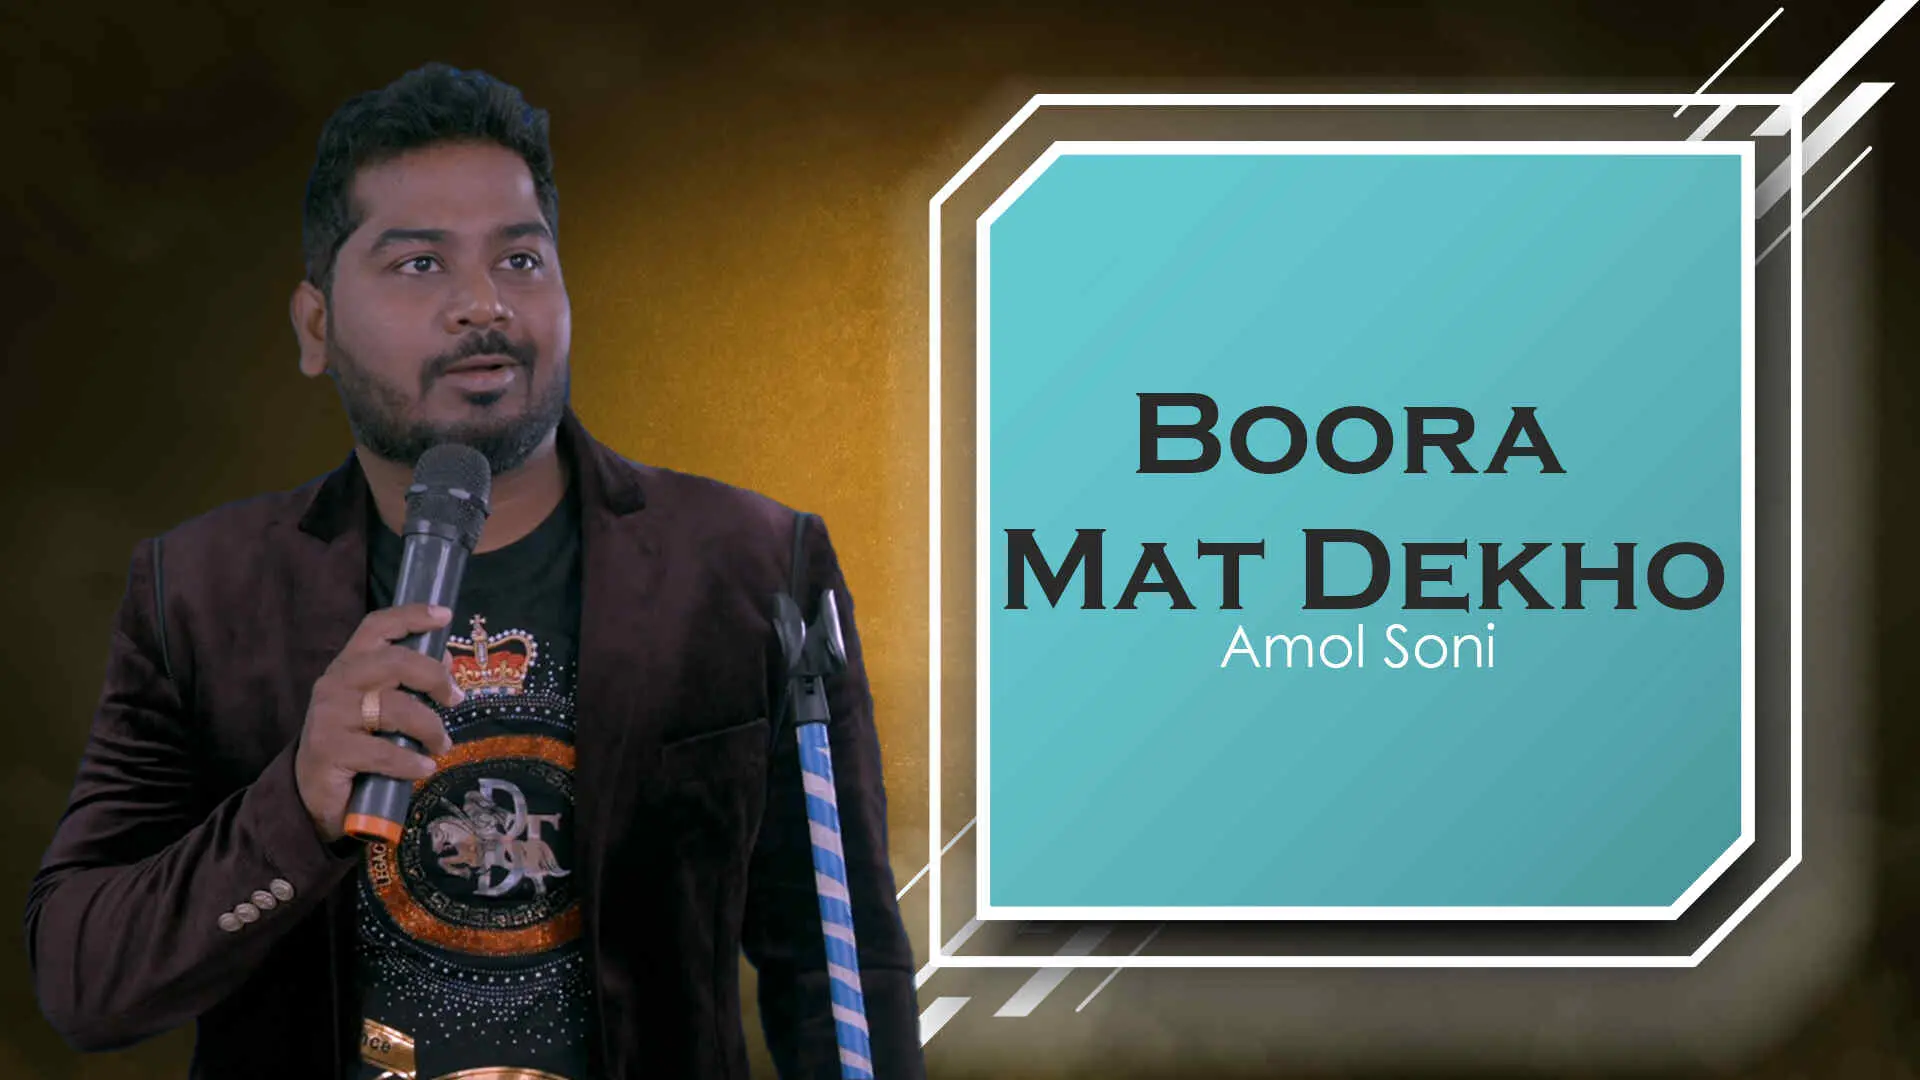 Boora Mat Dekho